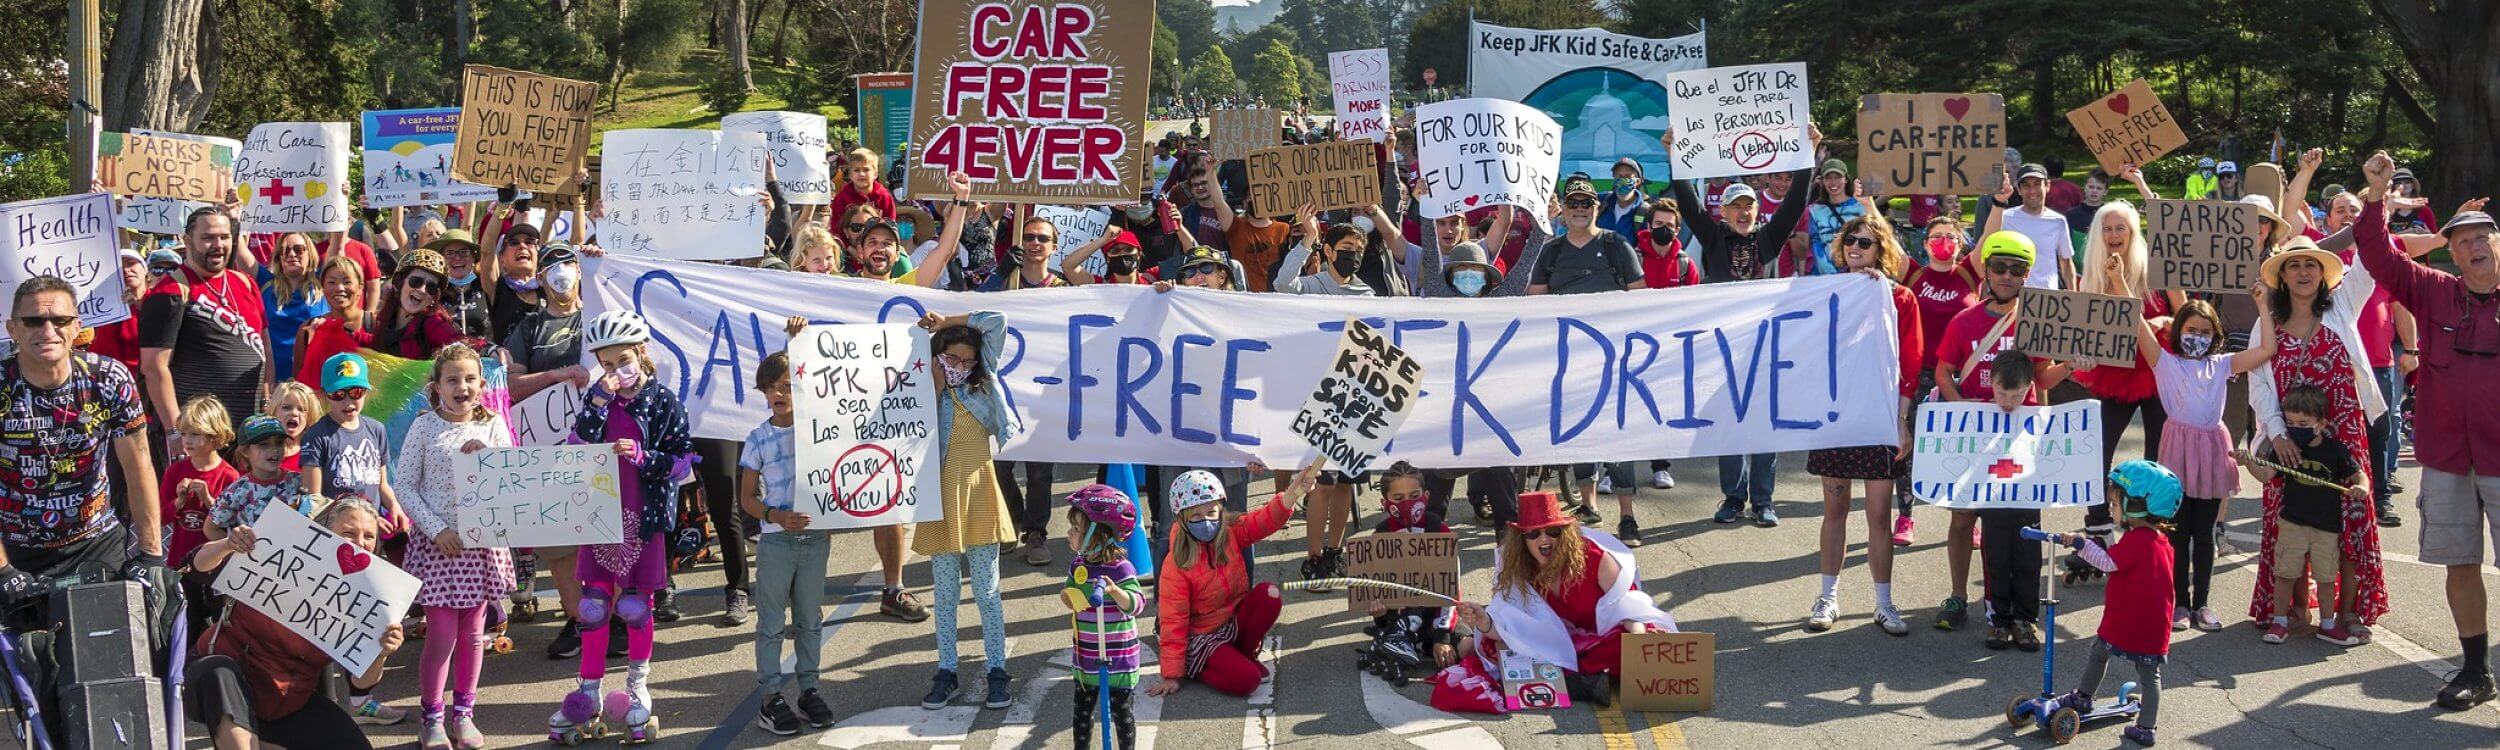 Press Release: Mayor Introduces Legislation for Car-Free JFK Drive